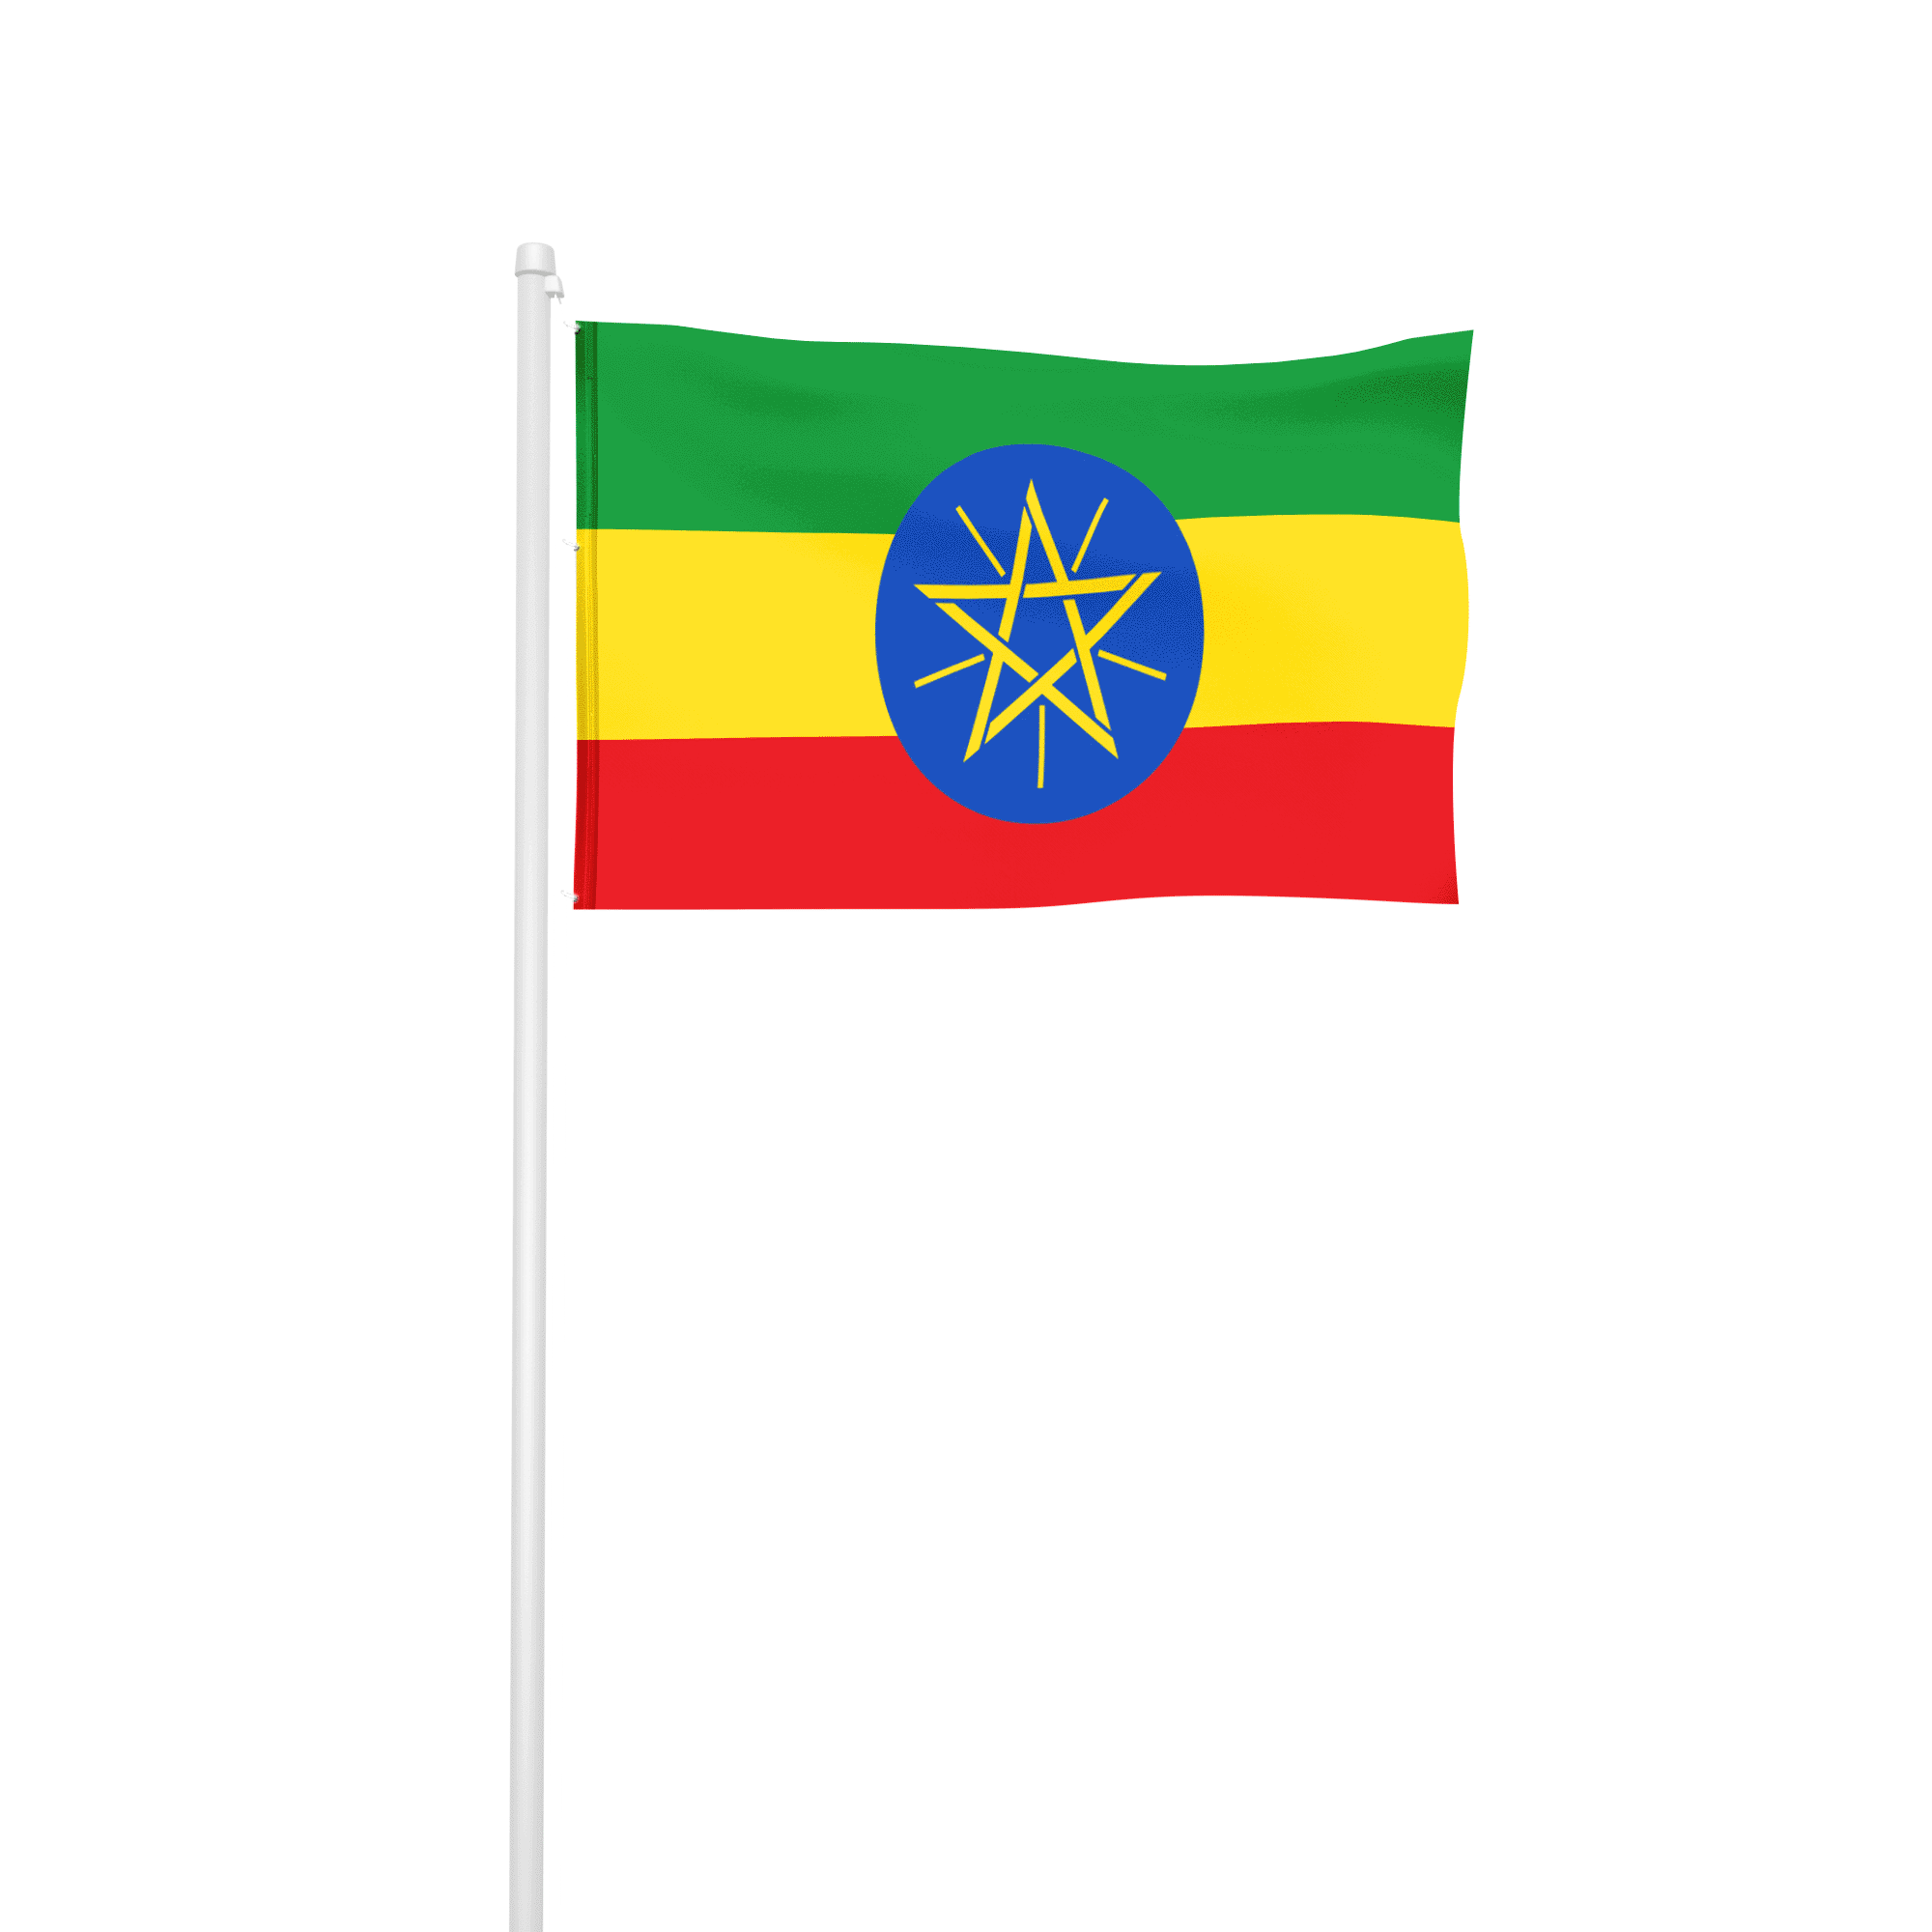 Äthiopien - Hissfahne